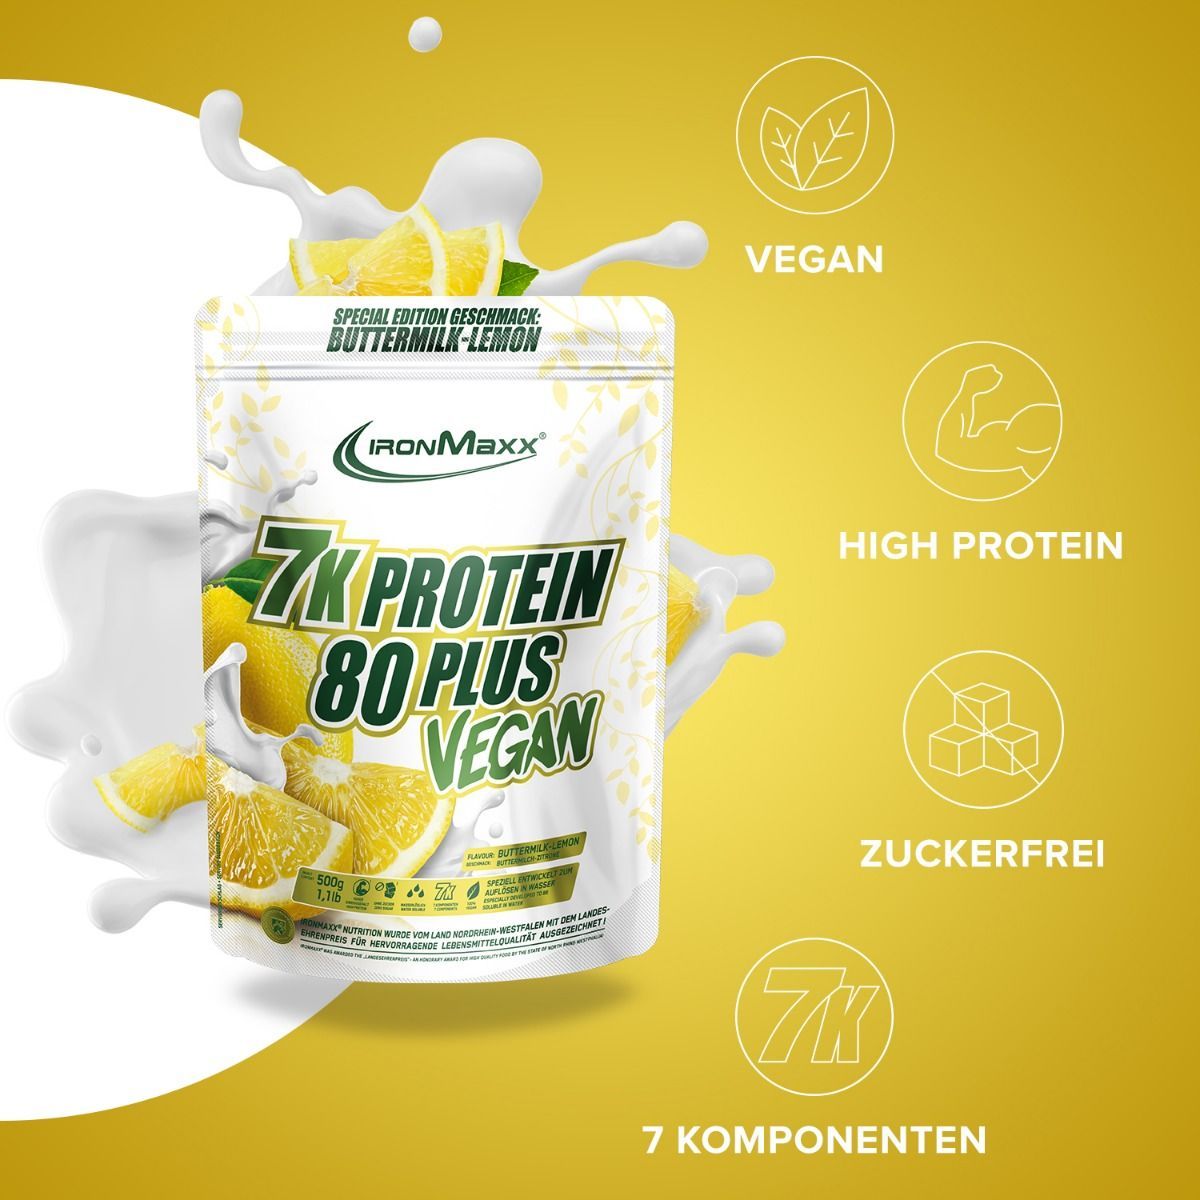 Протеїн IronMaxx Vegan Protein 7k - 80 Plus Пахта-Лимон 500 г - фото 2